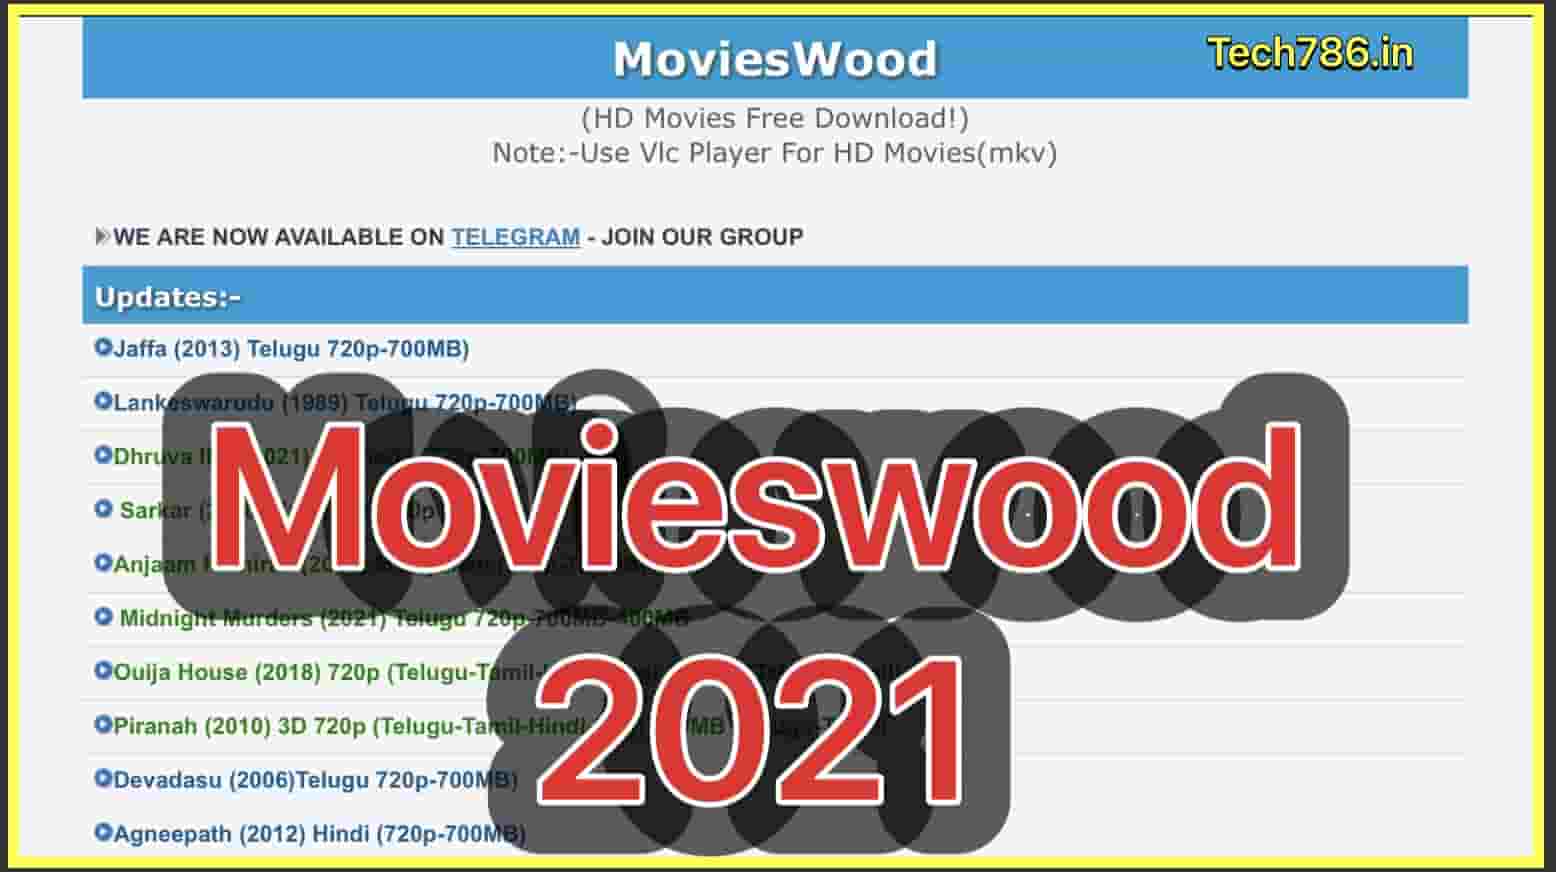 Movies wood me, ws Free Tamil HD Movies Download Telugu Full Movie Download Movies wood com Latest updates